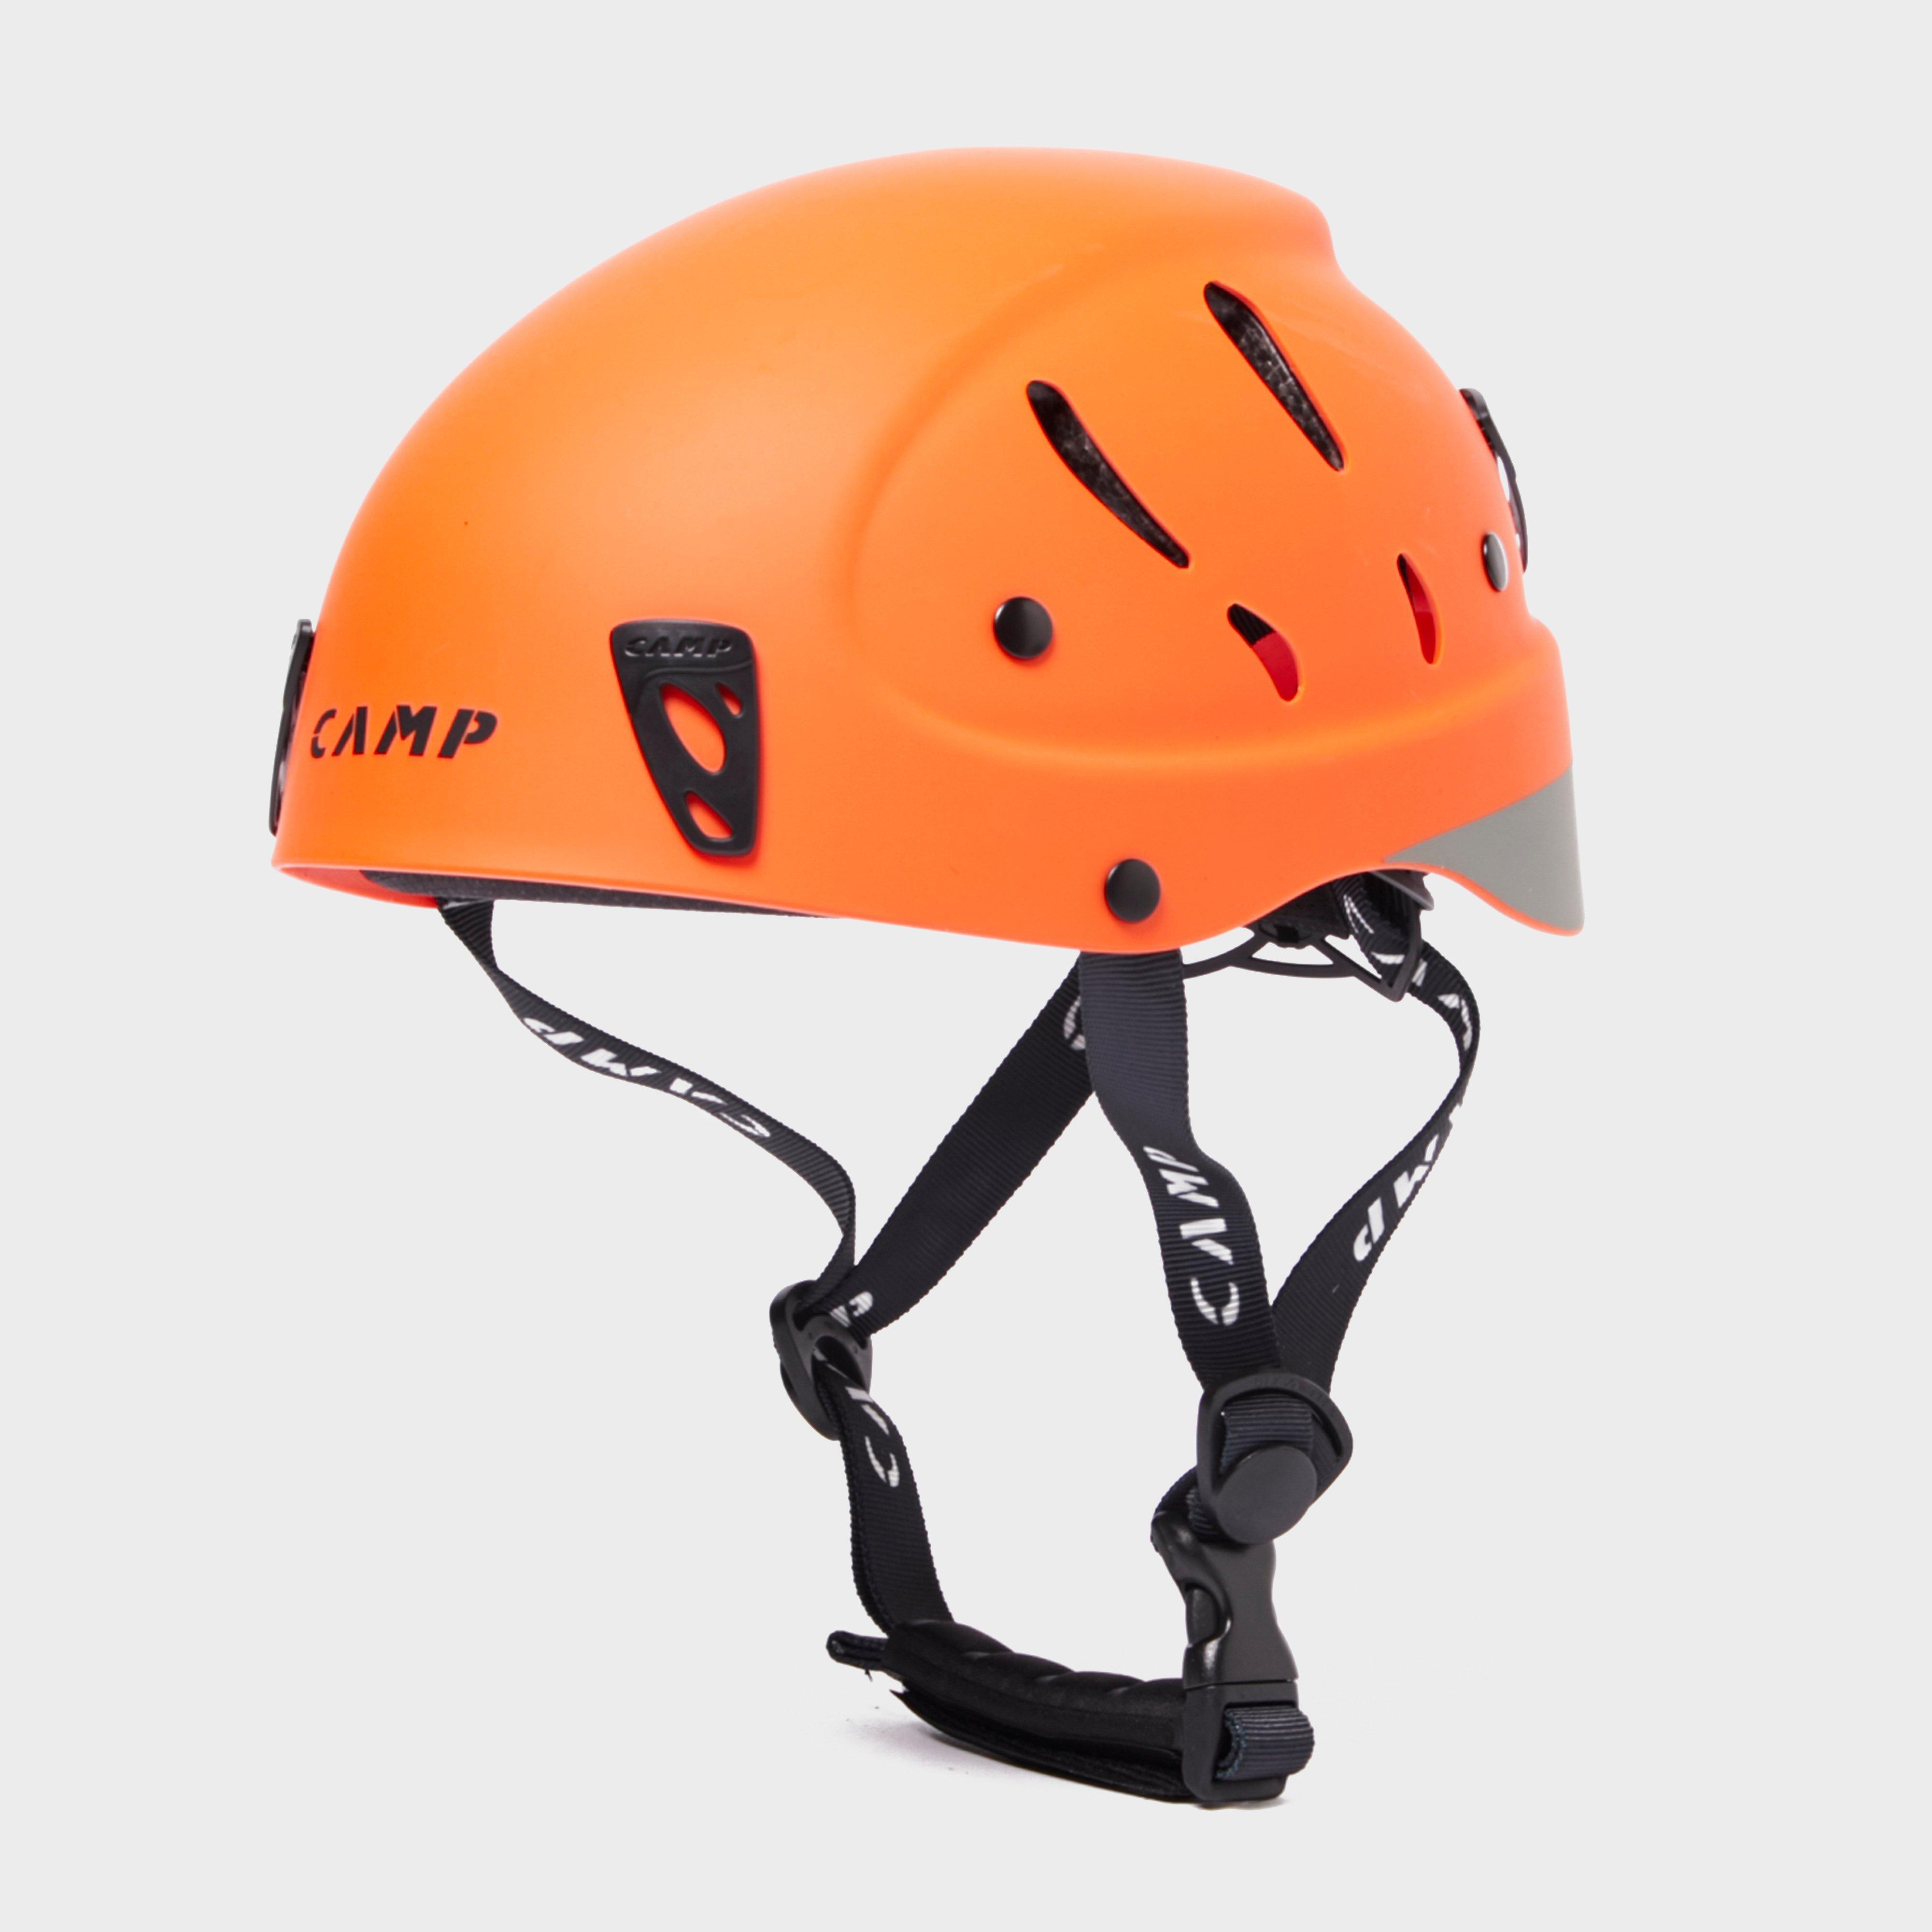  Camp Armour Pro Helmet, Orange